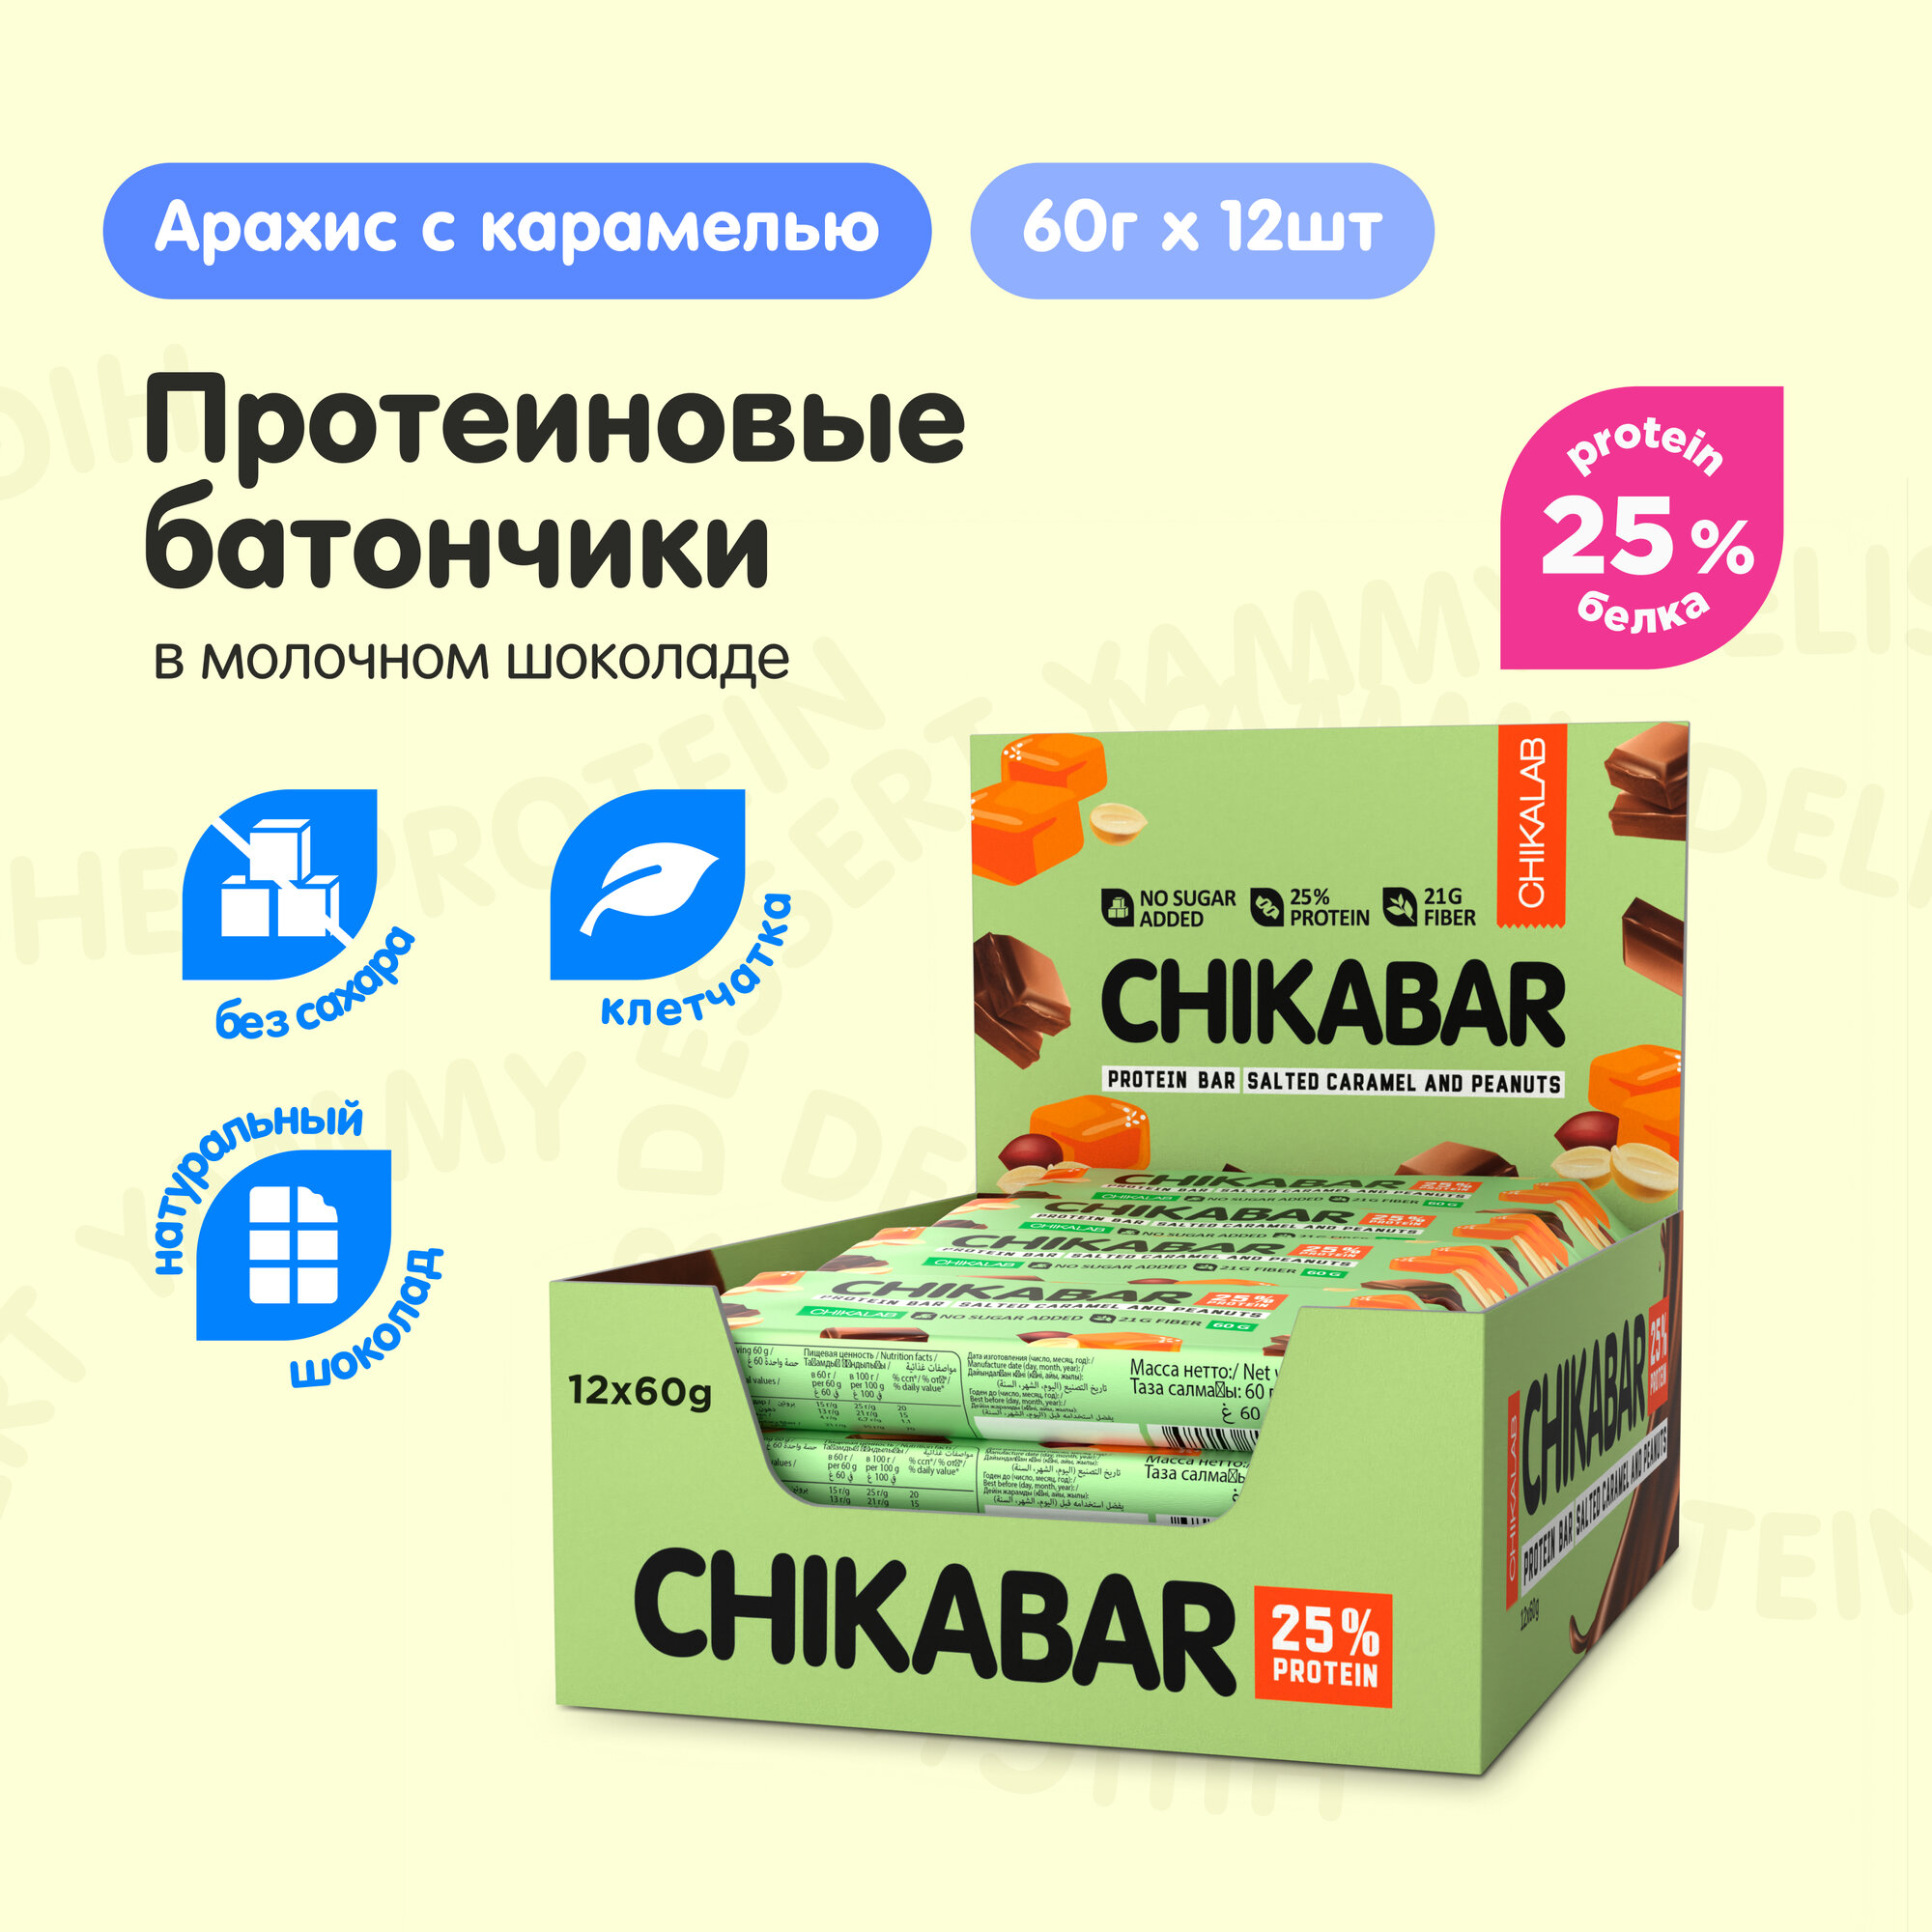 Протеиновые батончики в шоколаде CHIKALAB CHIKABAR без сахара "Арахис Карамель", 12шт х 60г